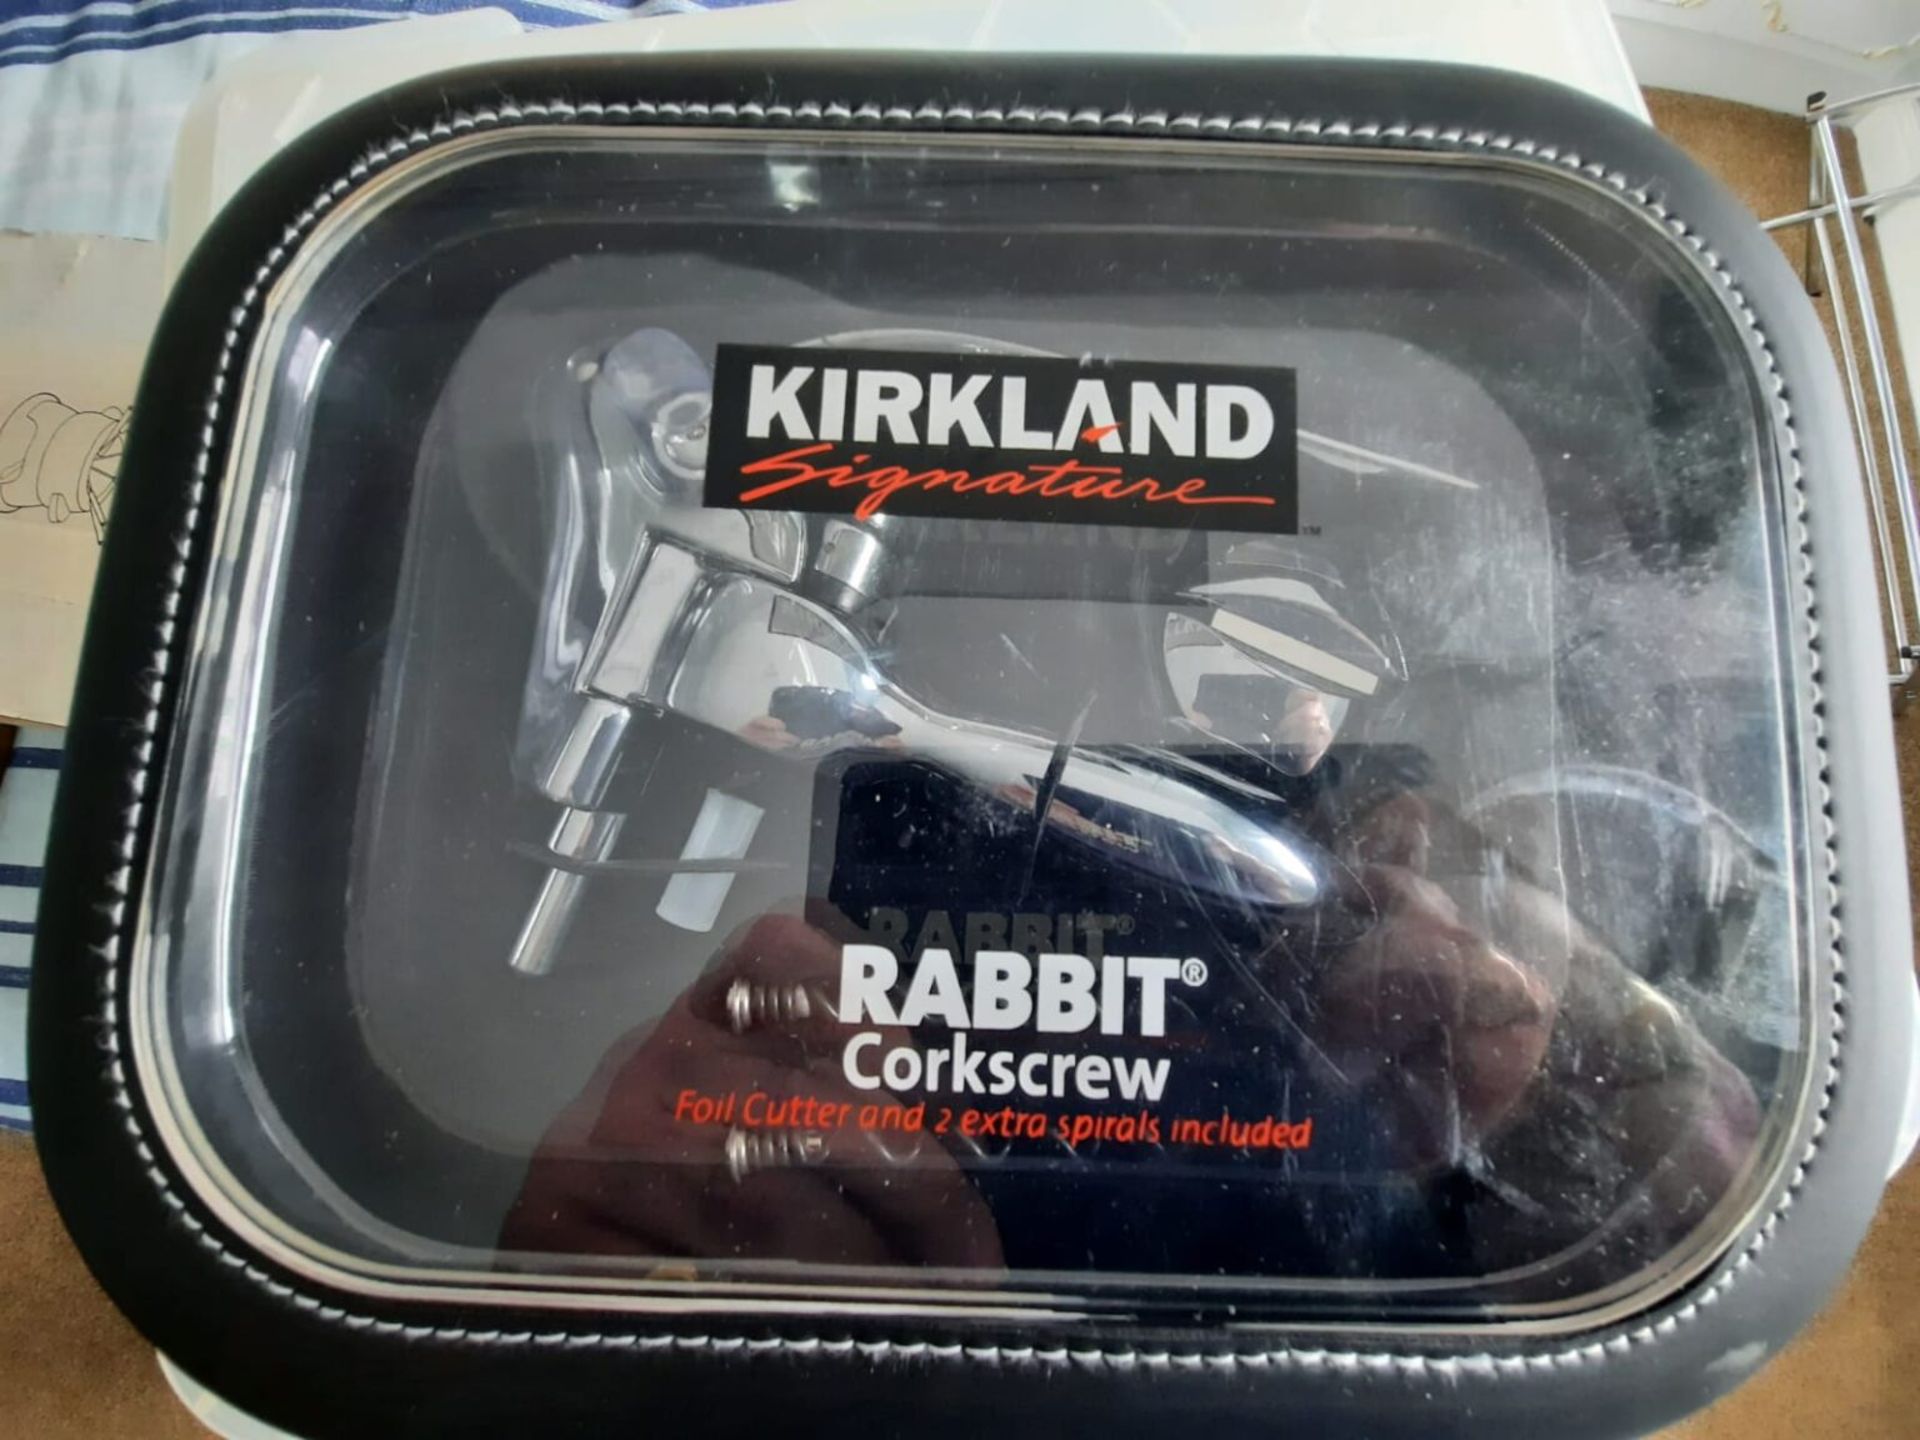 New Kirkland Rabbit Corkscrew Donated by Chris Wildman